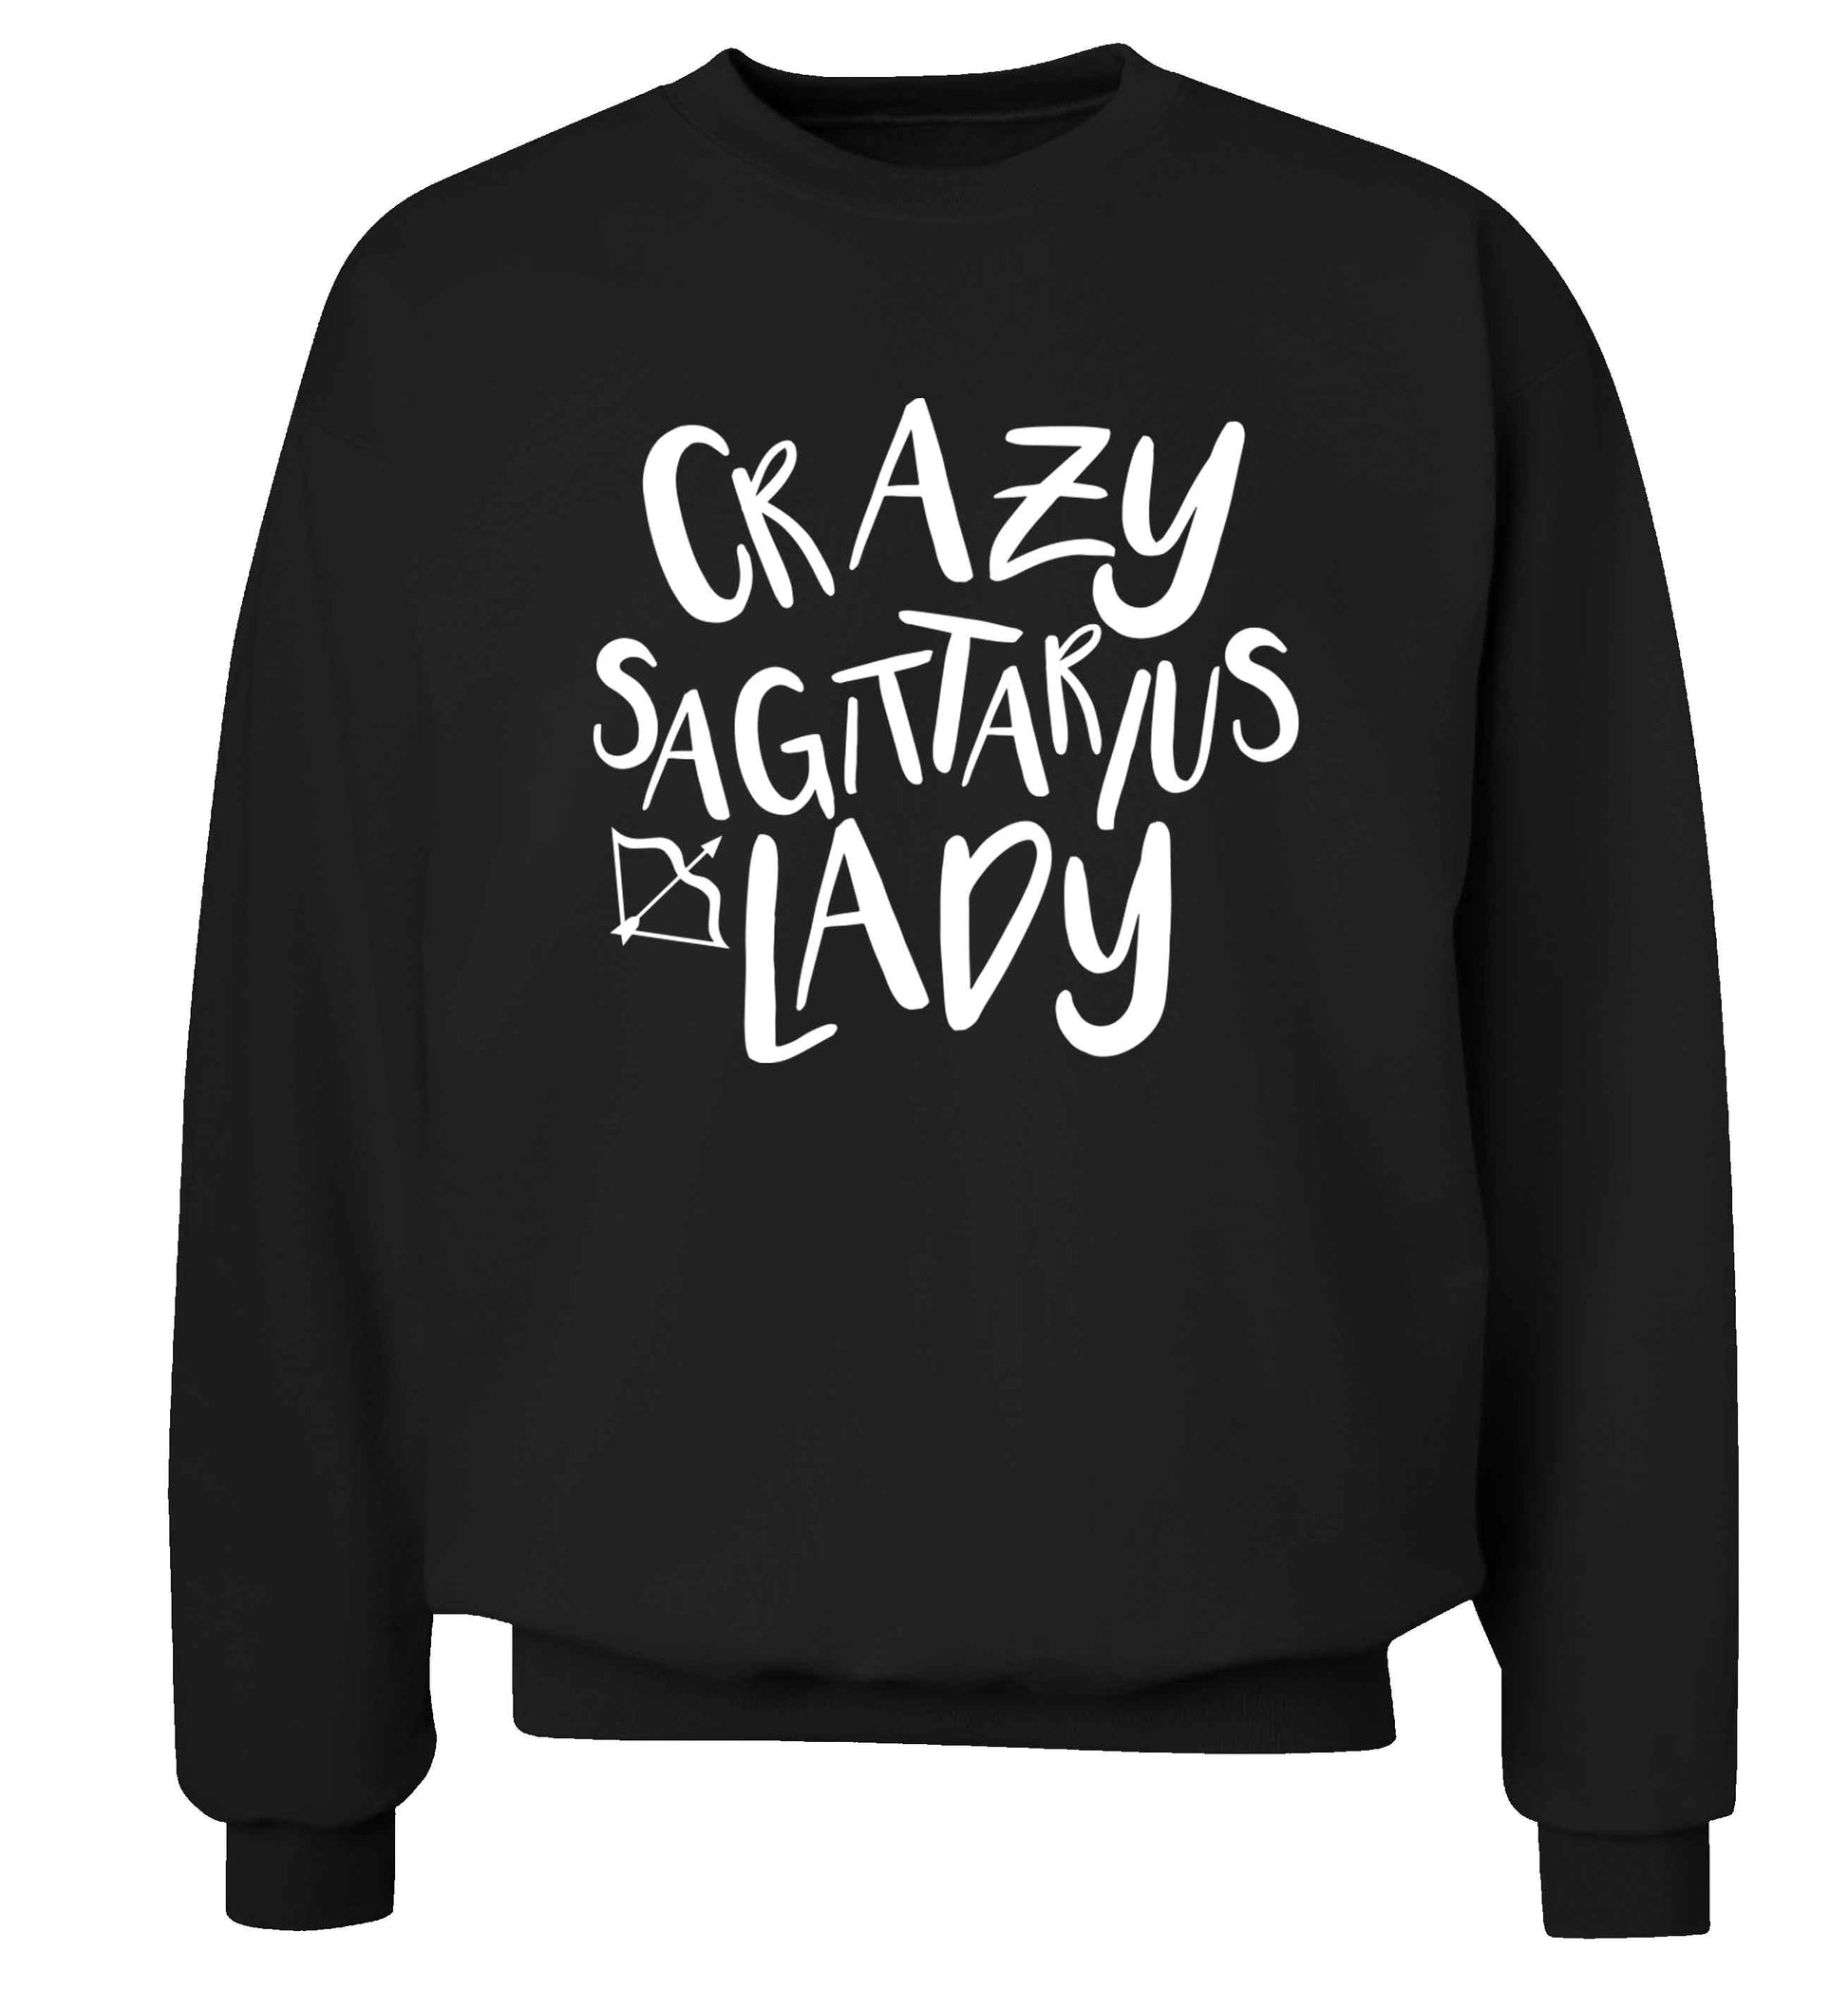 Crazy sagittarius lady Adult's unisex black Sweater 2XL